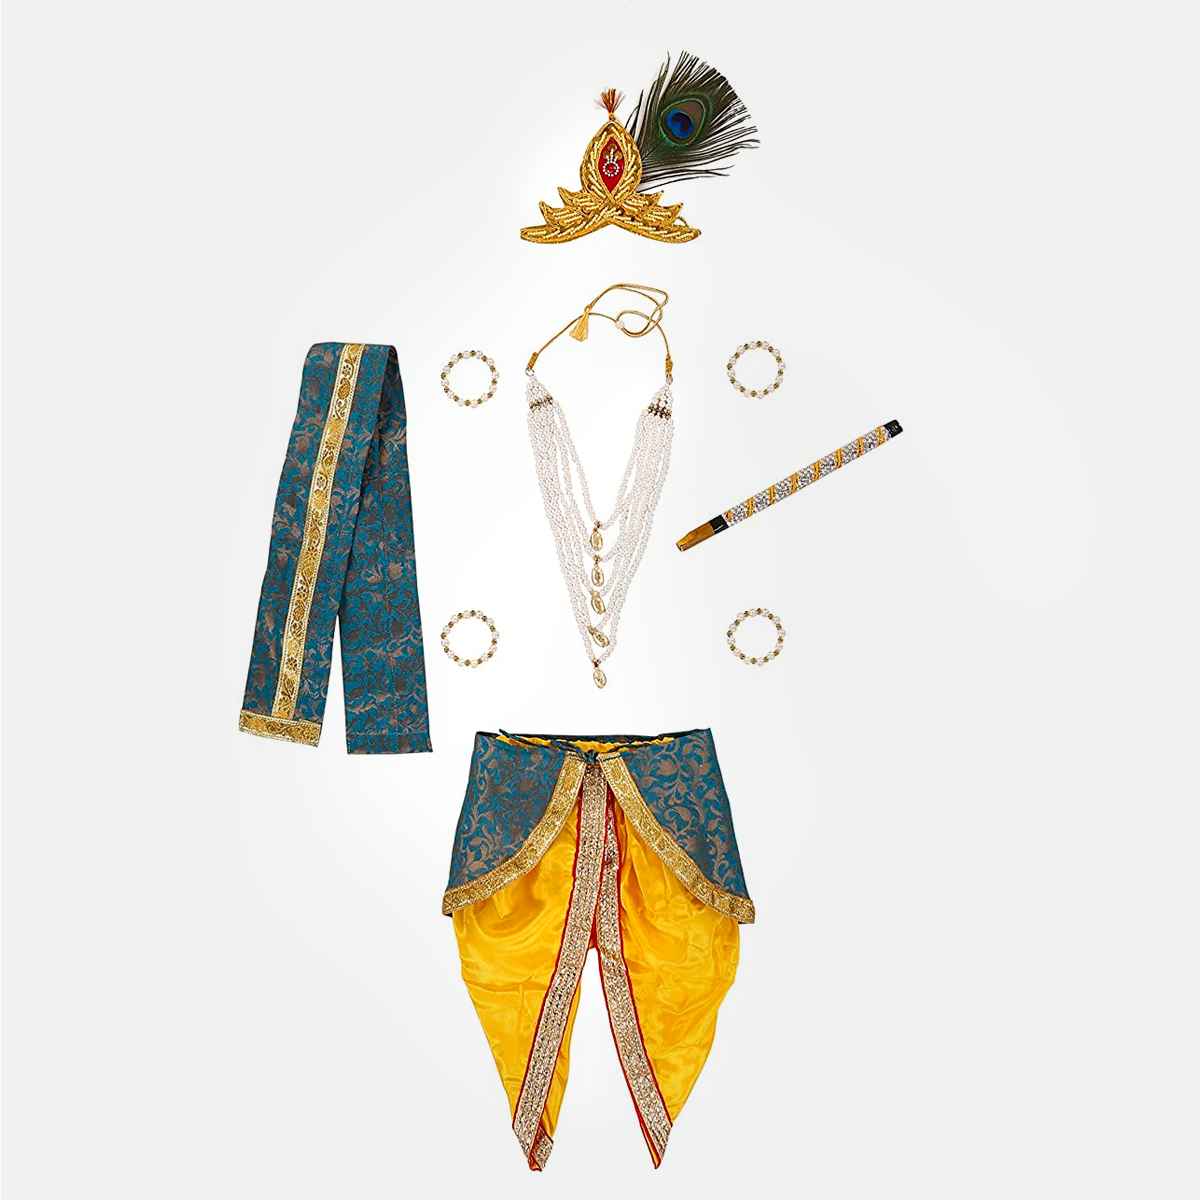 Baby Krishna Dress for Janmashtami with Krishna Mukut, Peacock Feather & Flute - Yellow-Ferozi